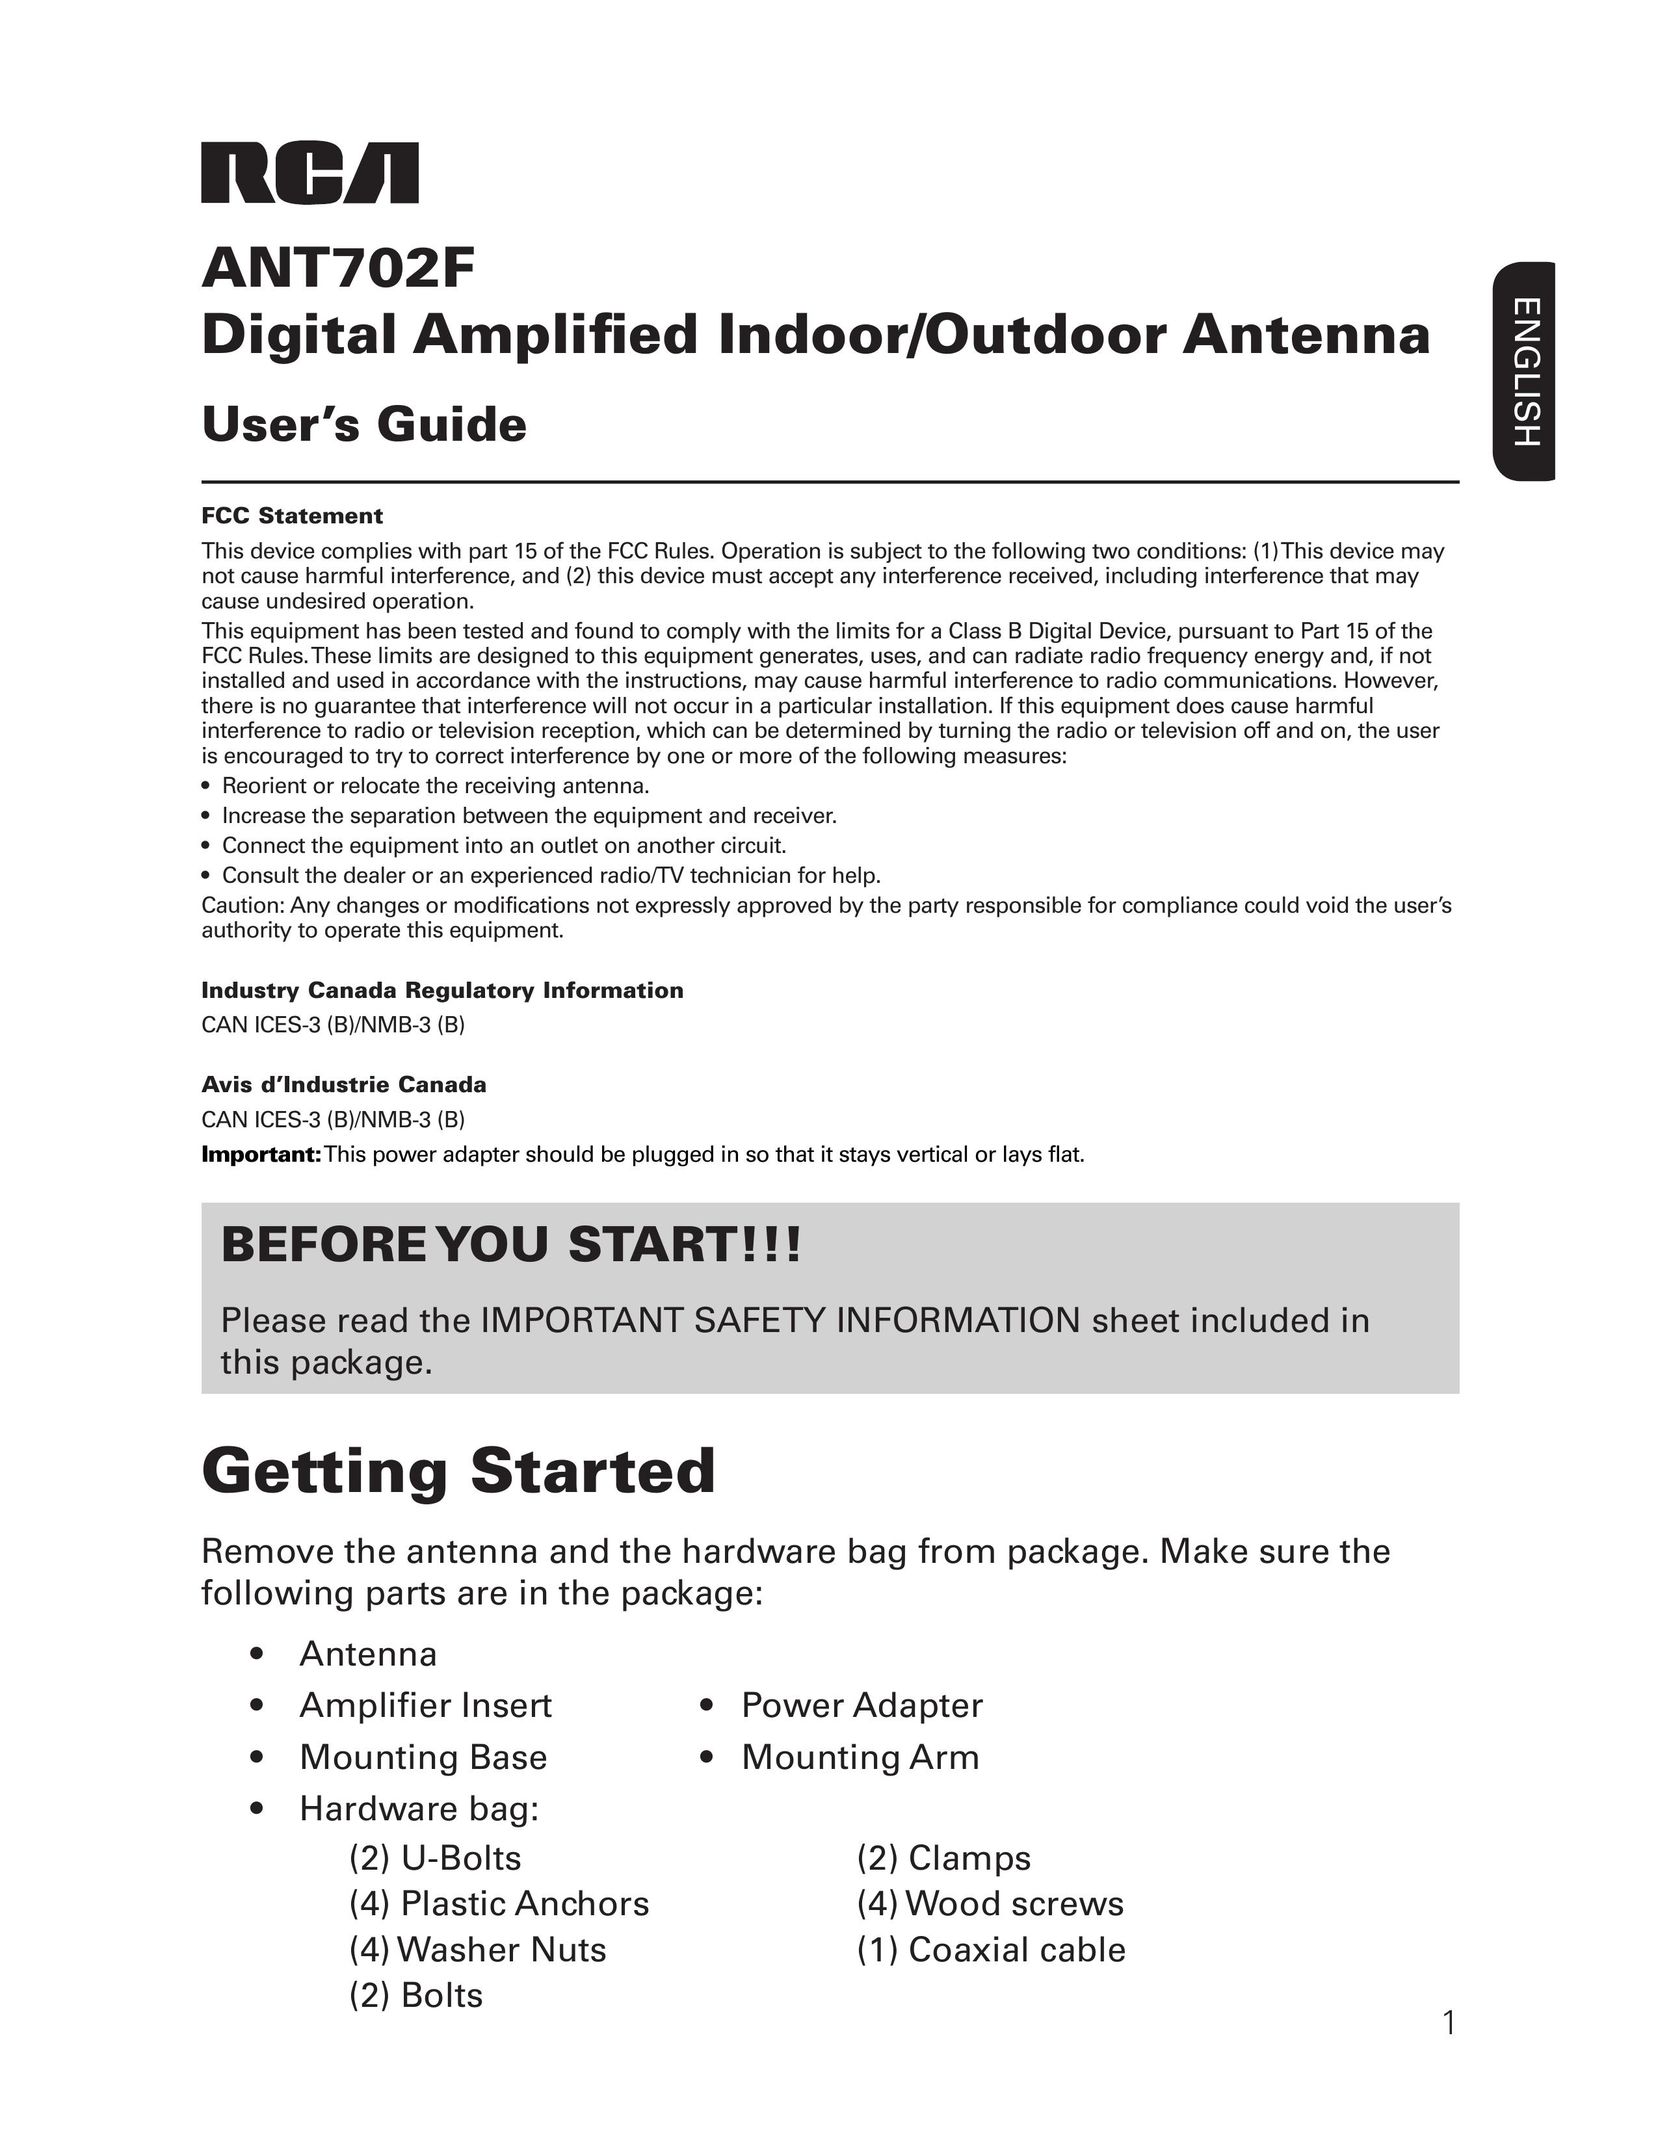 RCA ANT702F TV Antenna User Manual